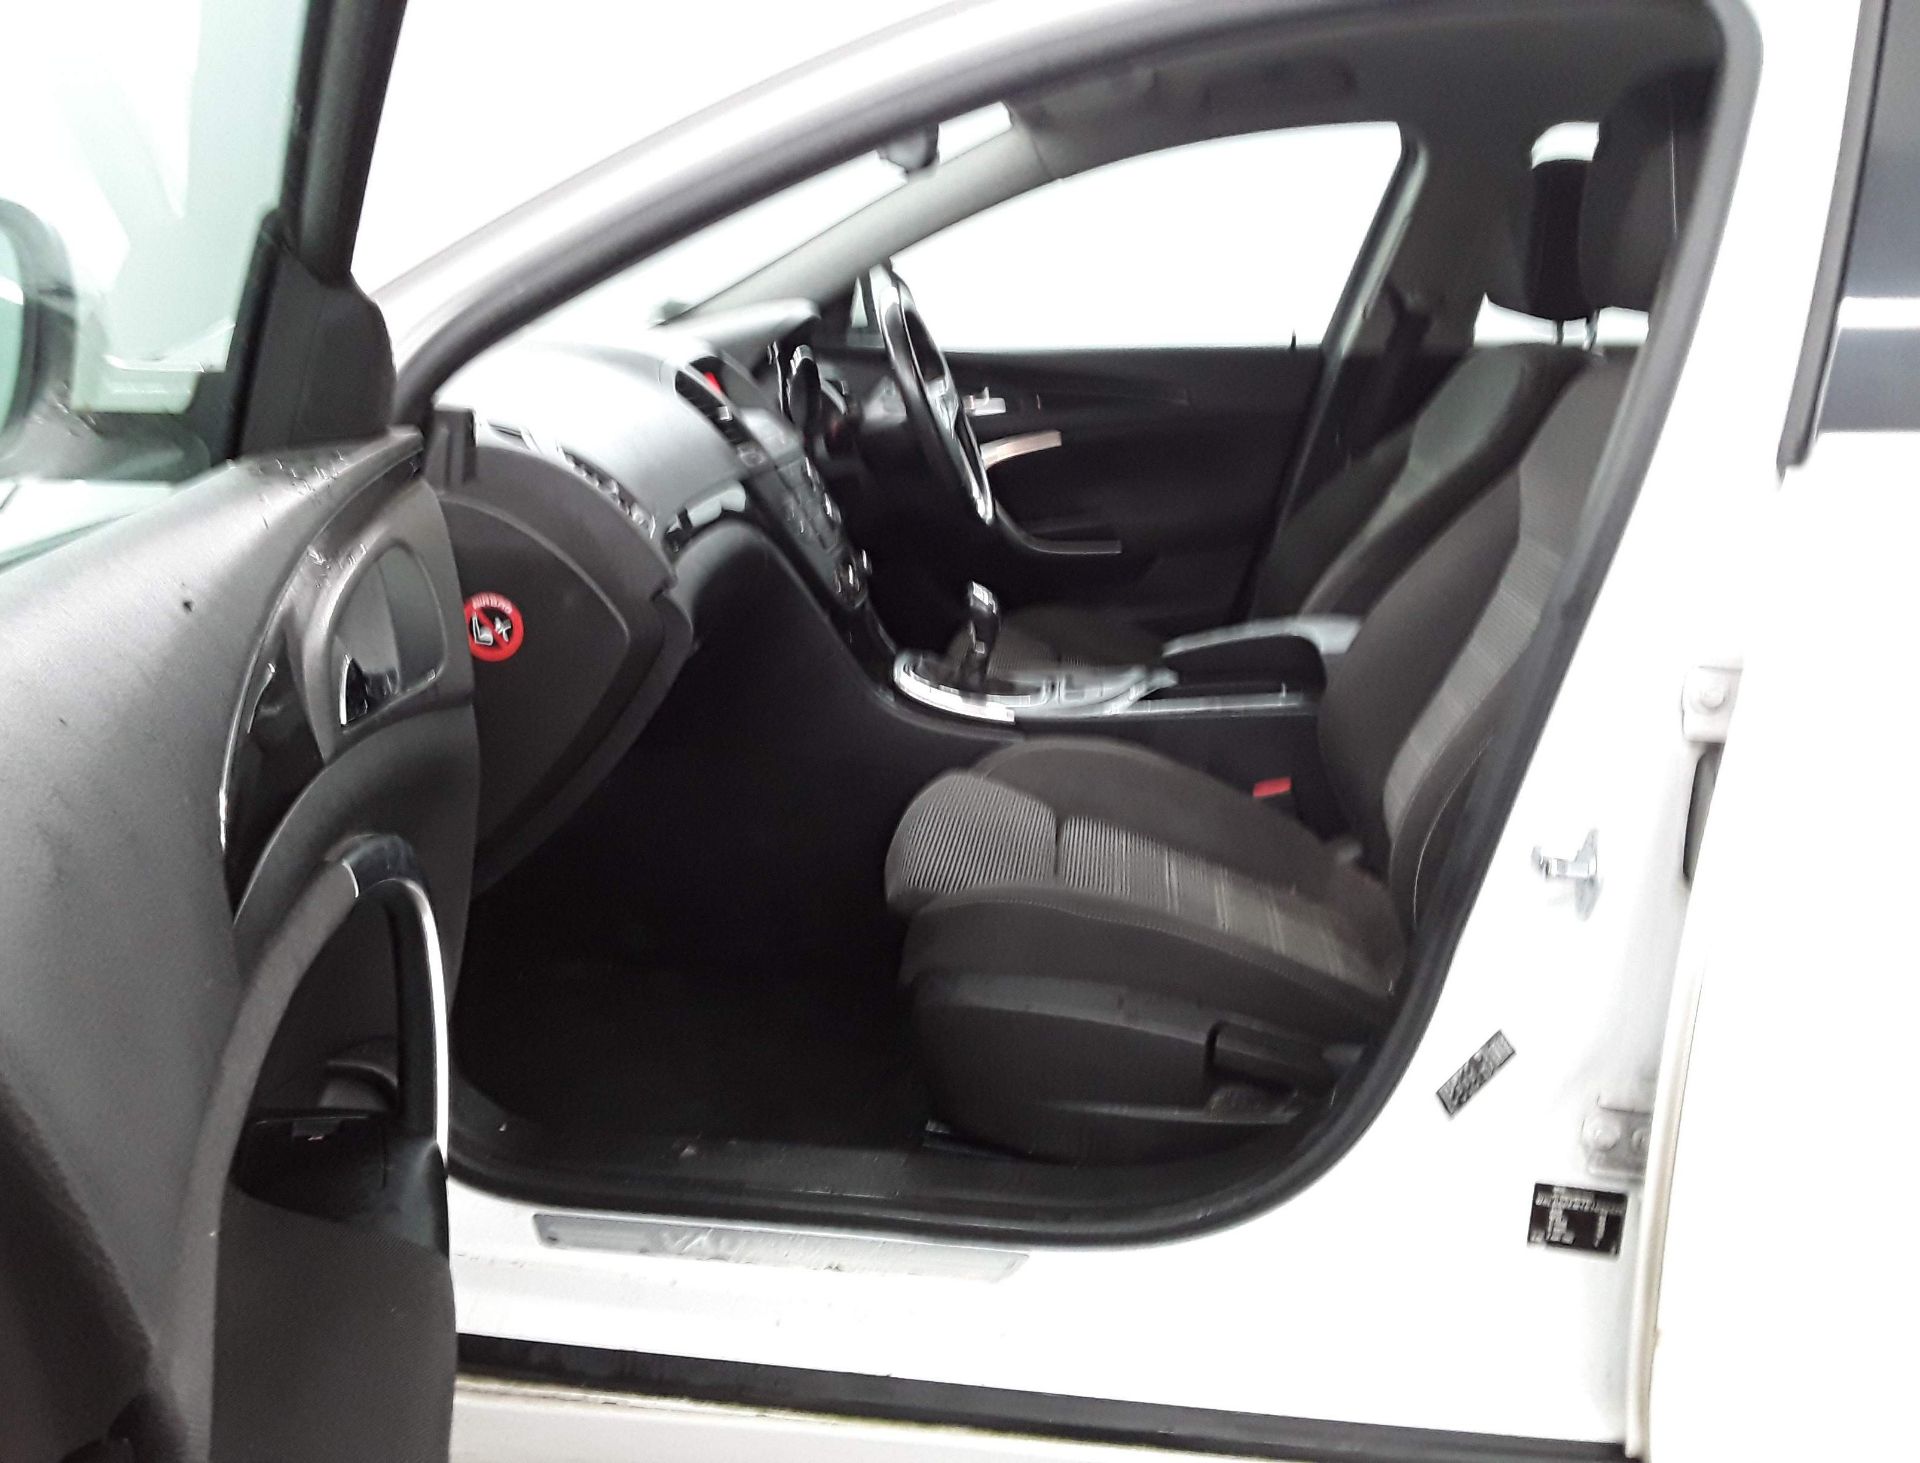 2010 Vauxhall Insignia 2.0 CDTI SRI 5 Door Hatchback - CL505 - NO VAT ON THE HAMMER - Location: Corb - Image 7 of 11